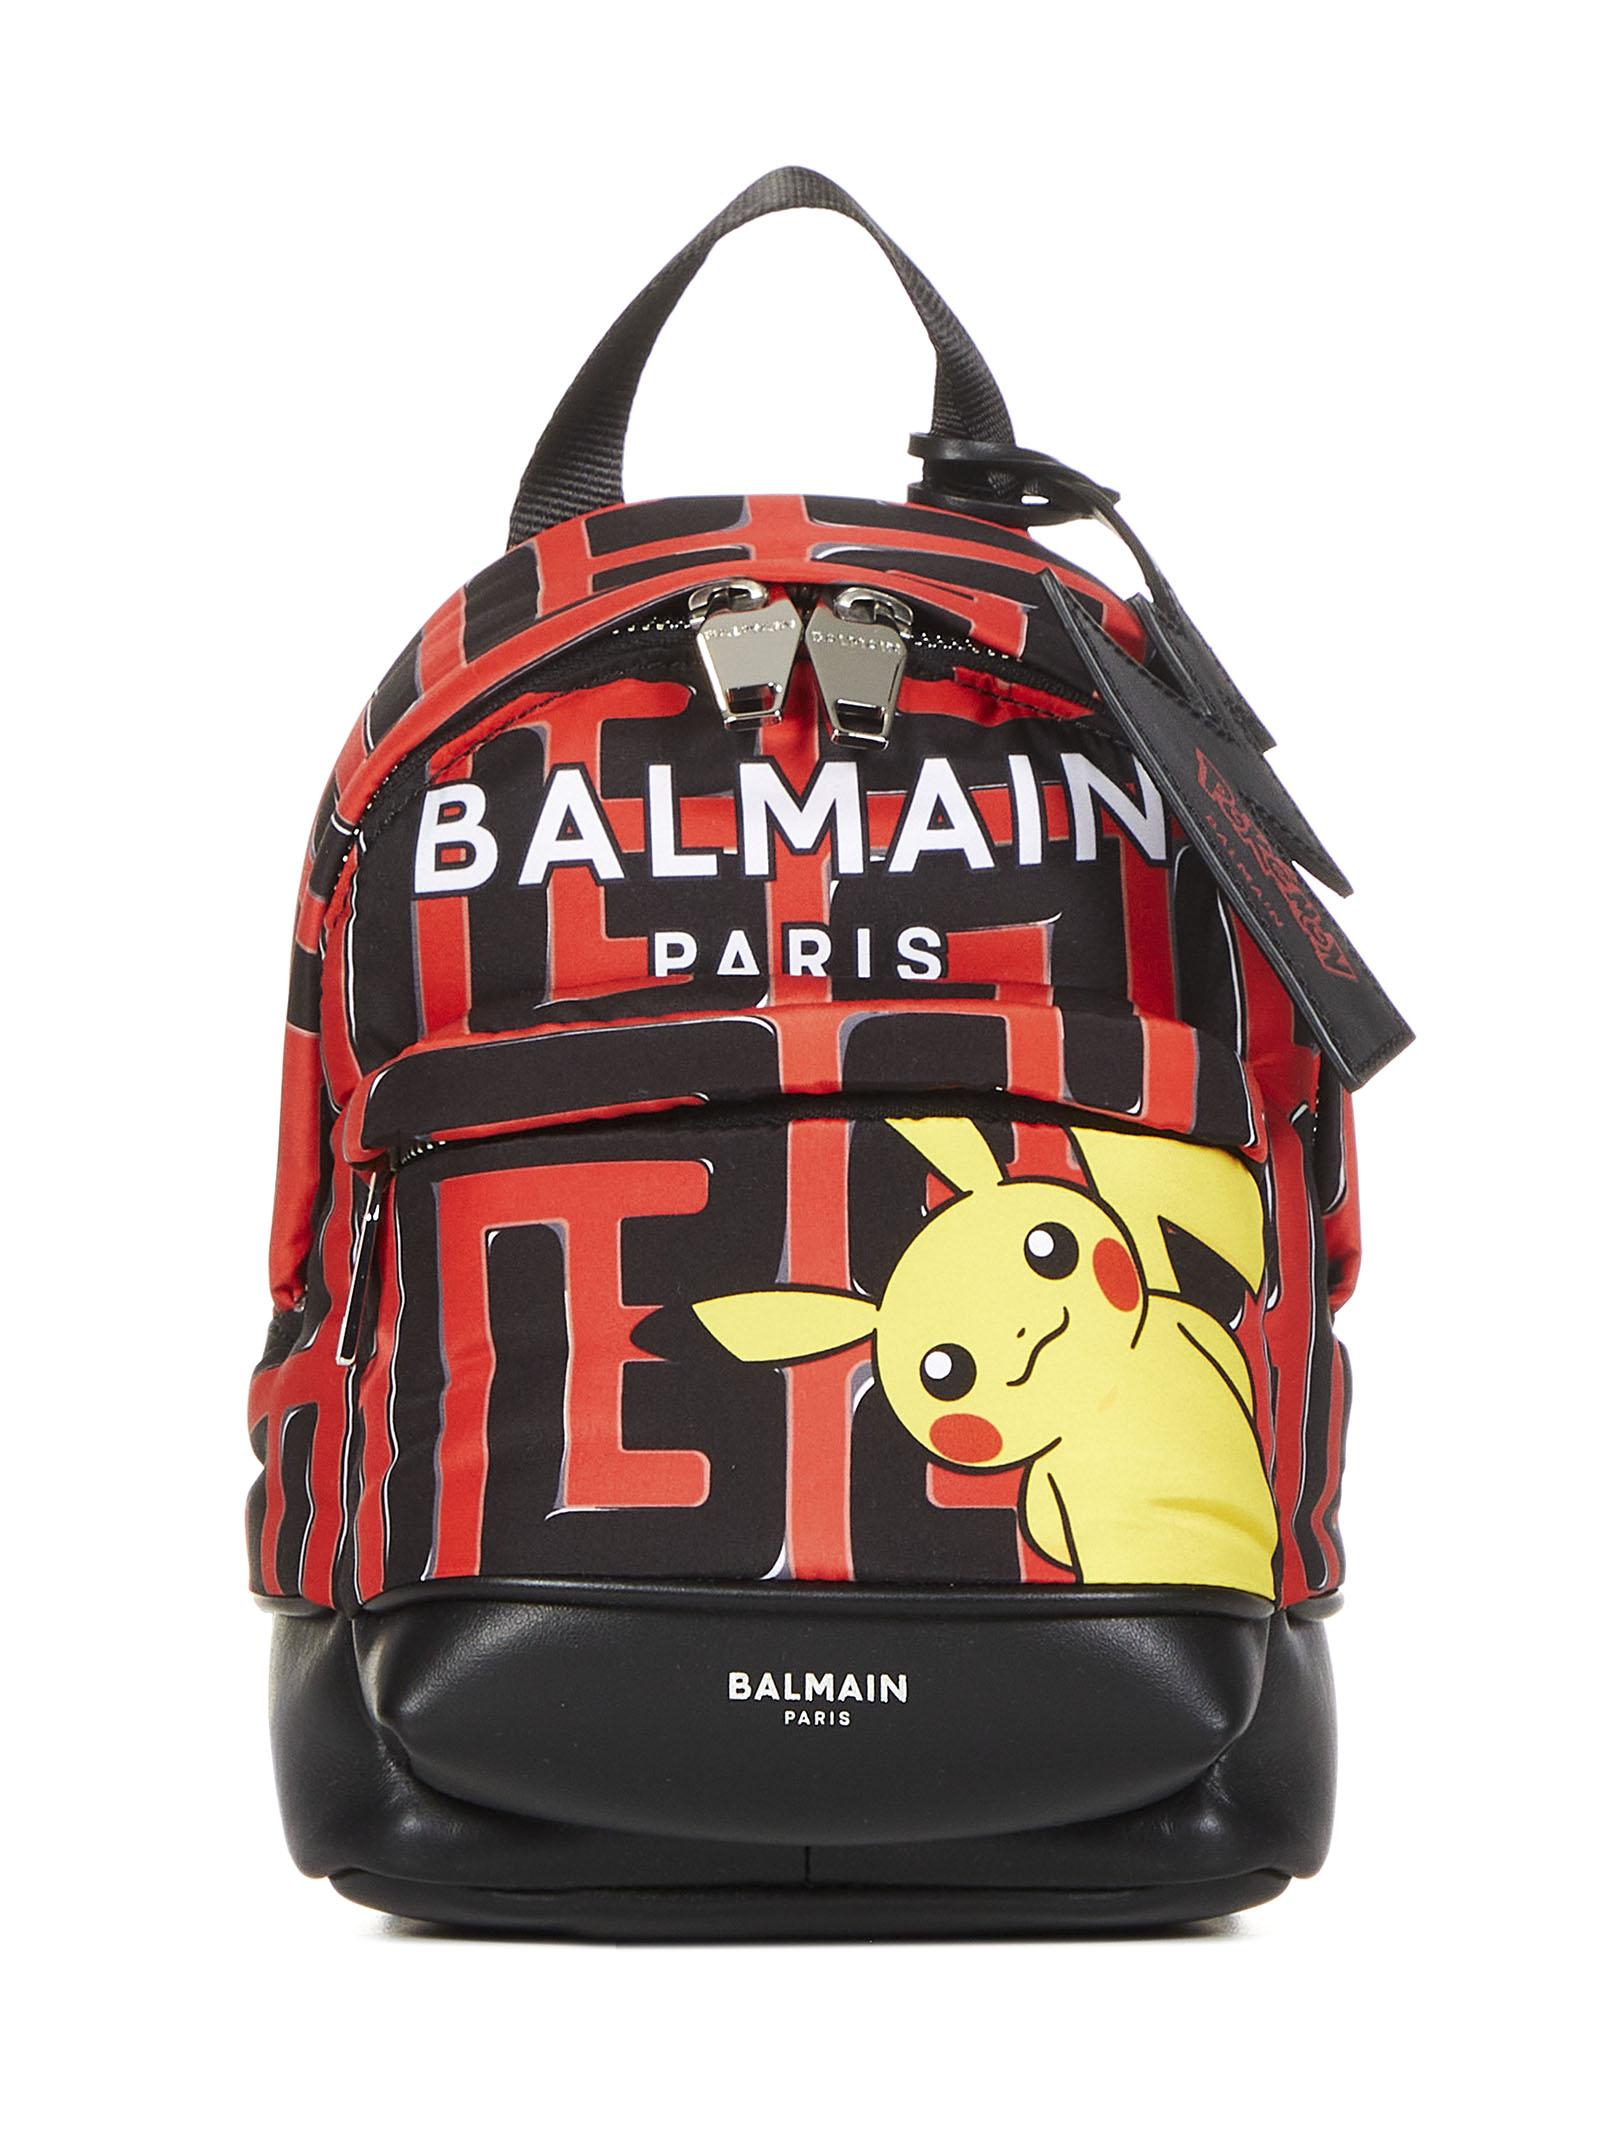 Balmain X Pokémon Backpack in Red | Lyst